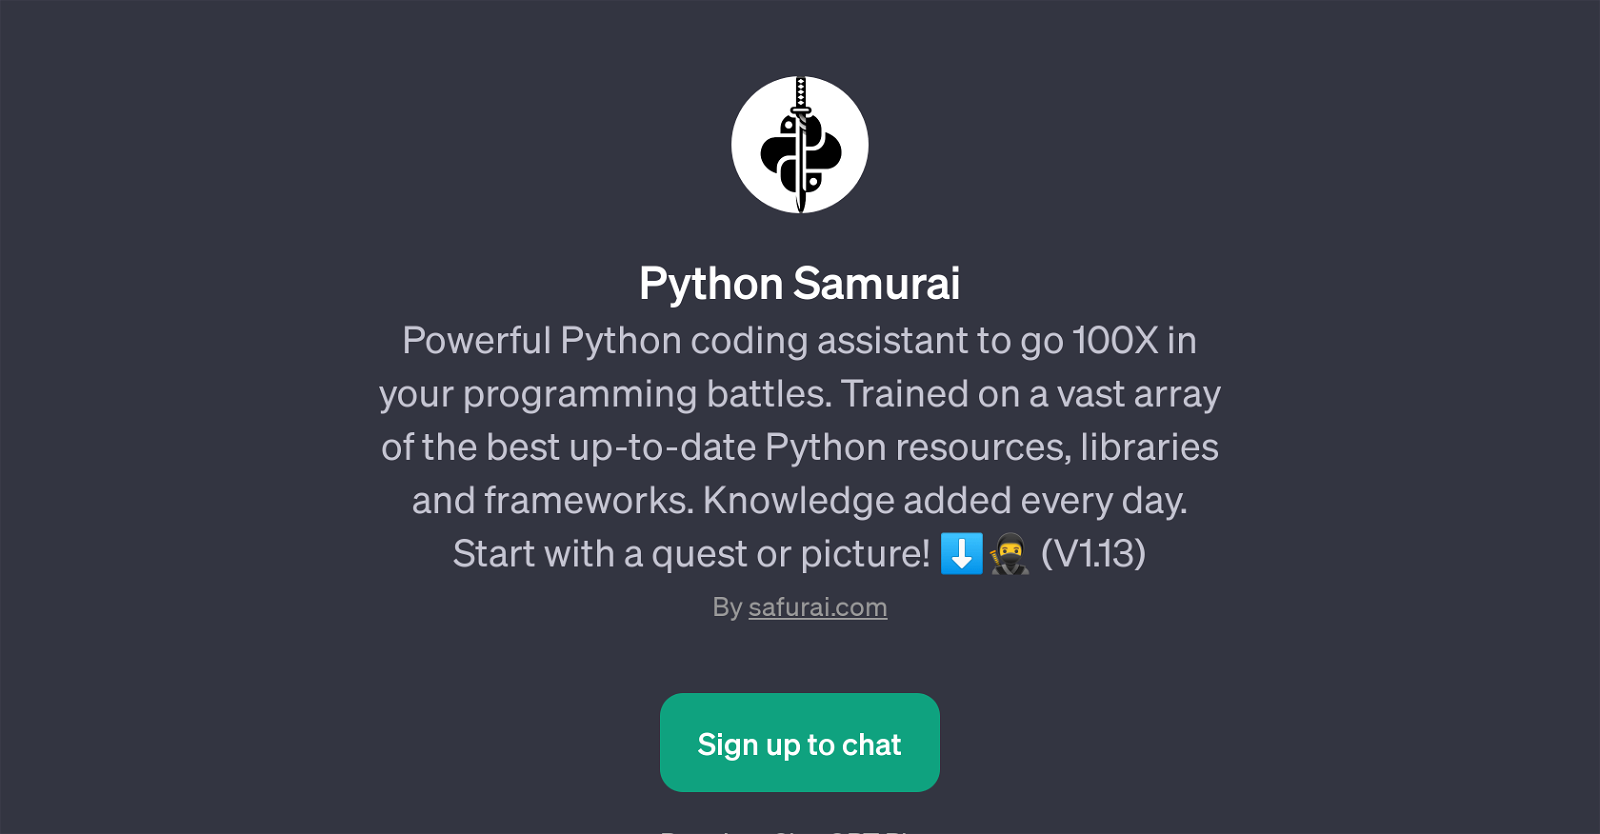 Python Samurai website